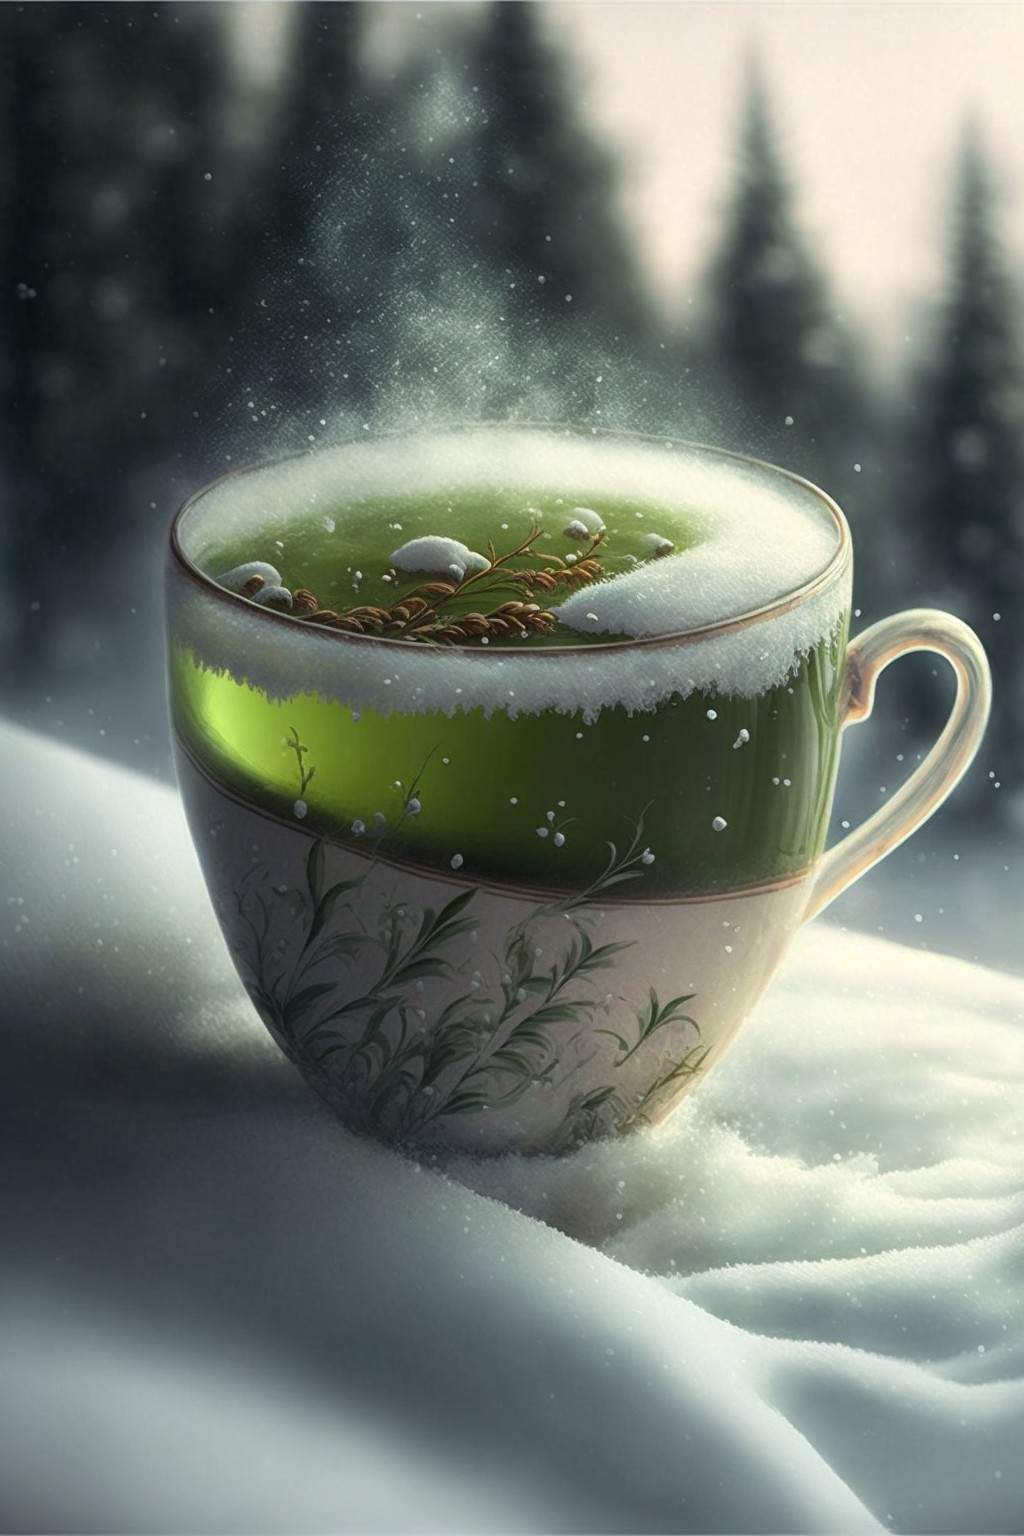 Green Tea and Green Tea Ice Cream in a Snowstorm